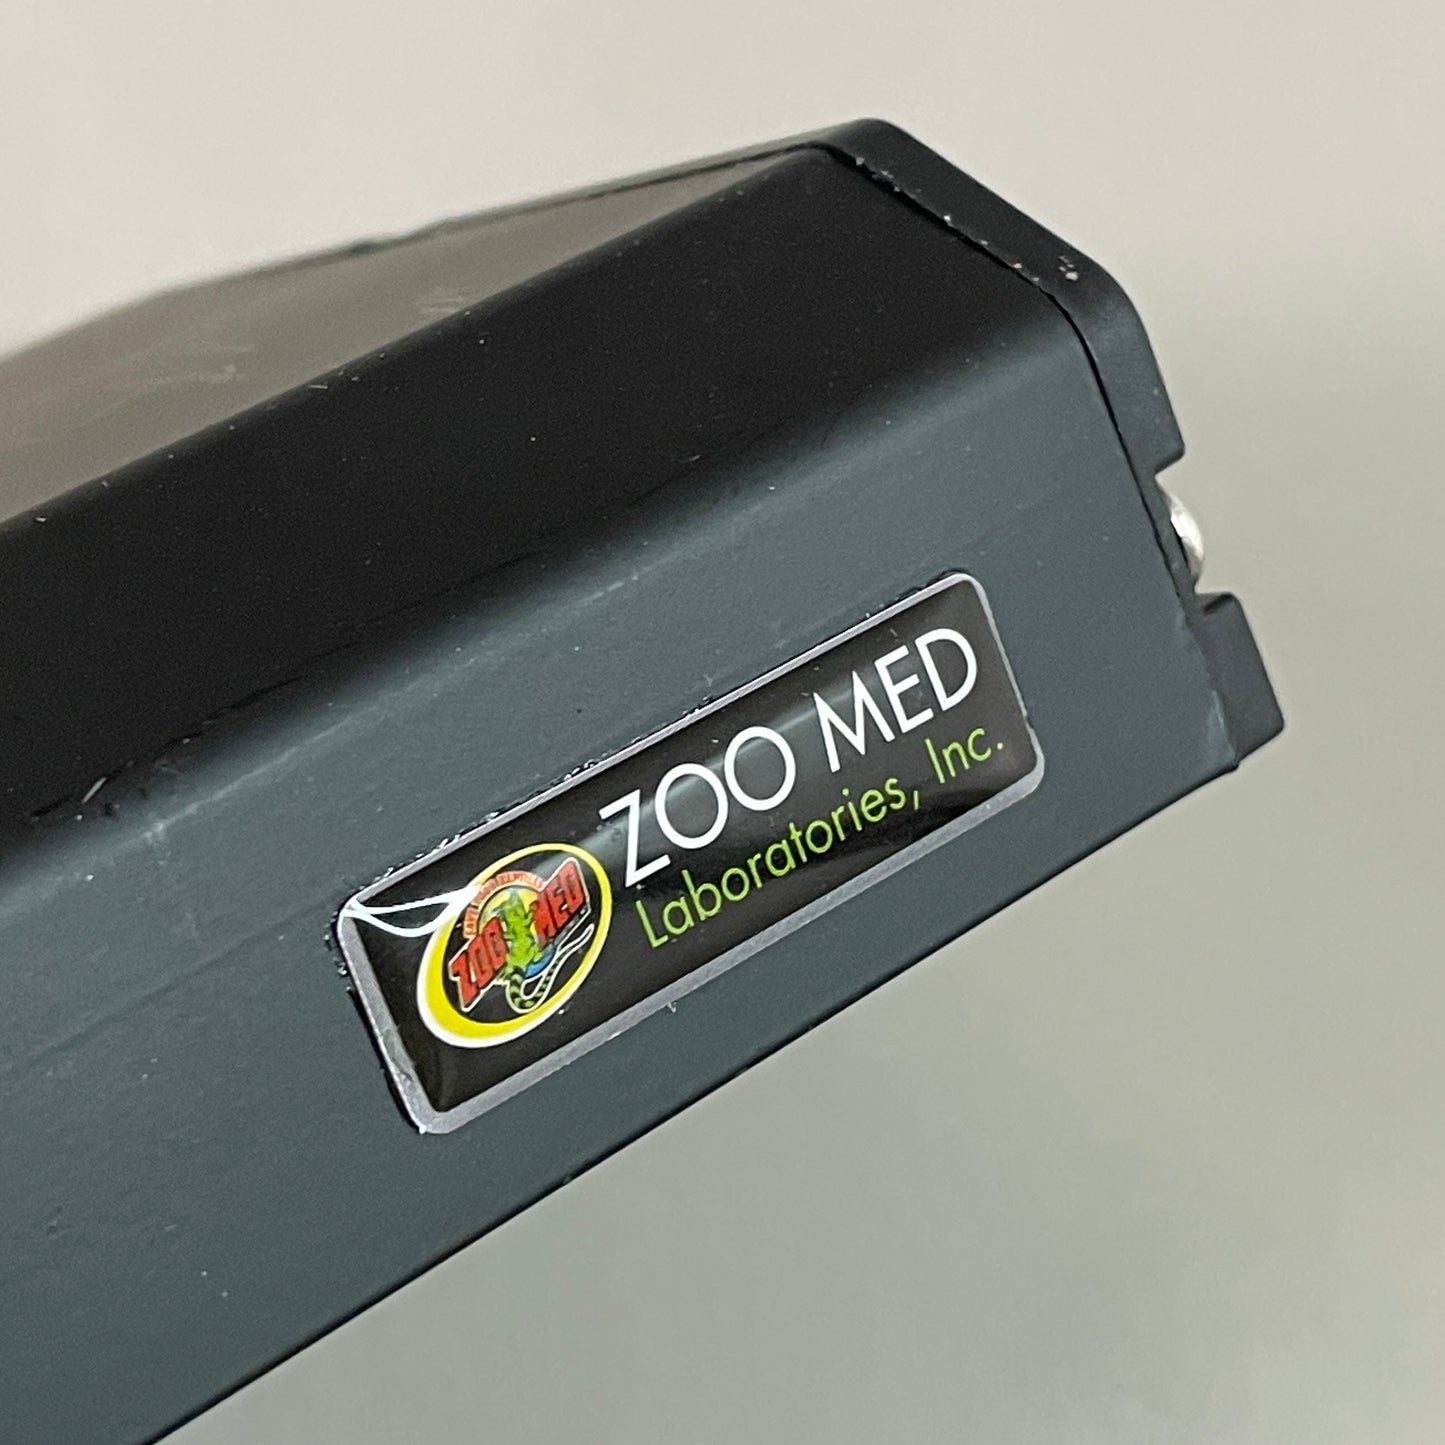 ZOO MED Laboratories Reptisun T8 Terrarium Low Profile Hood 36" LF-63 (New)